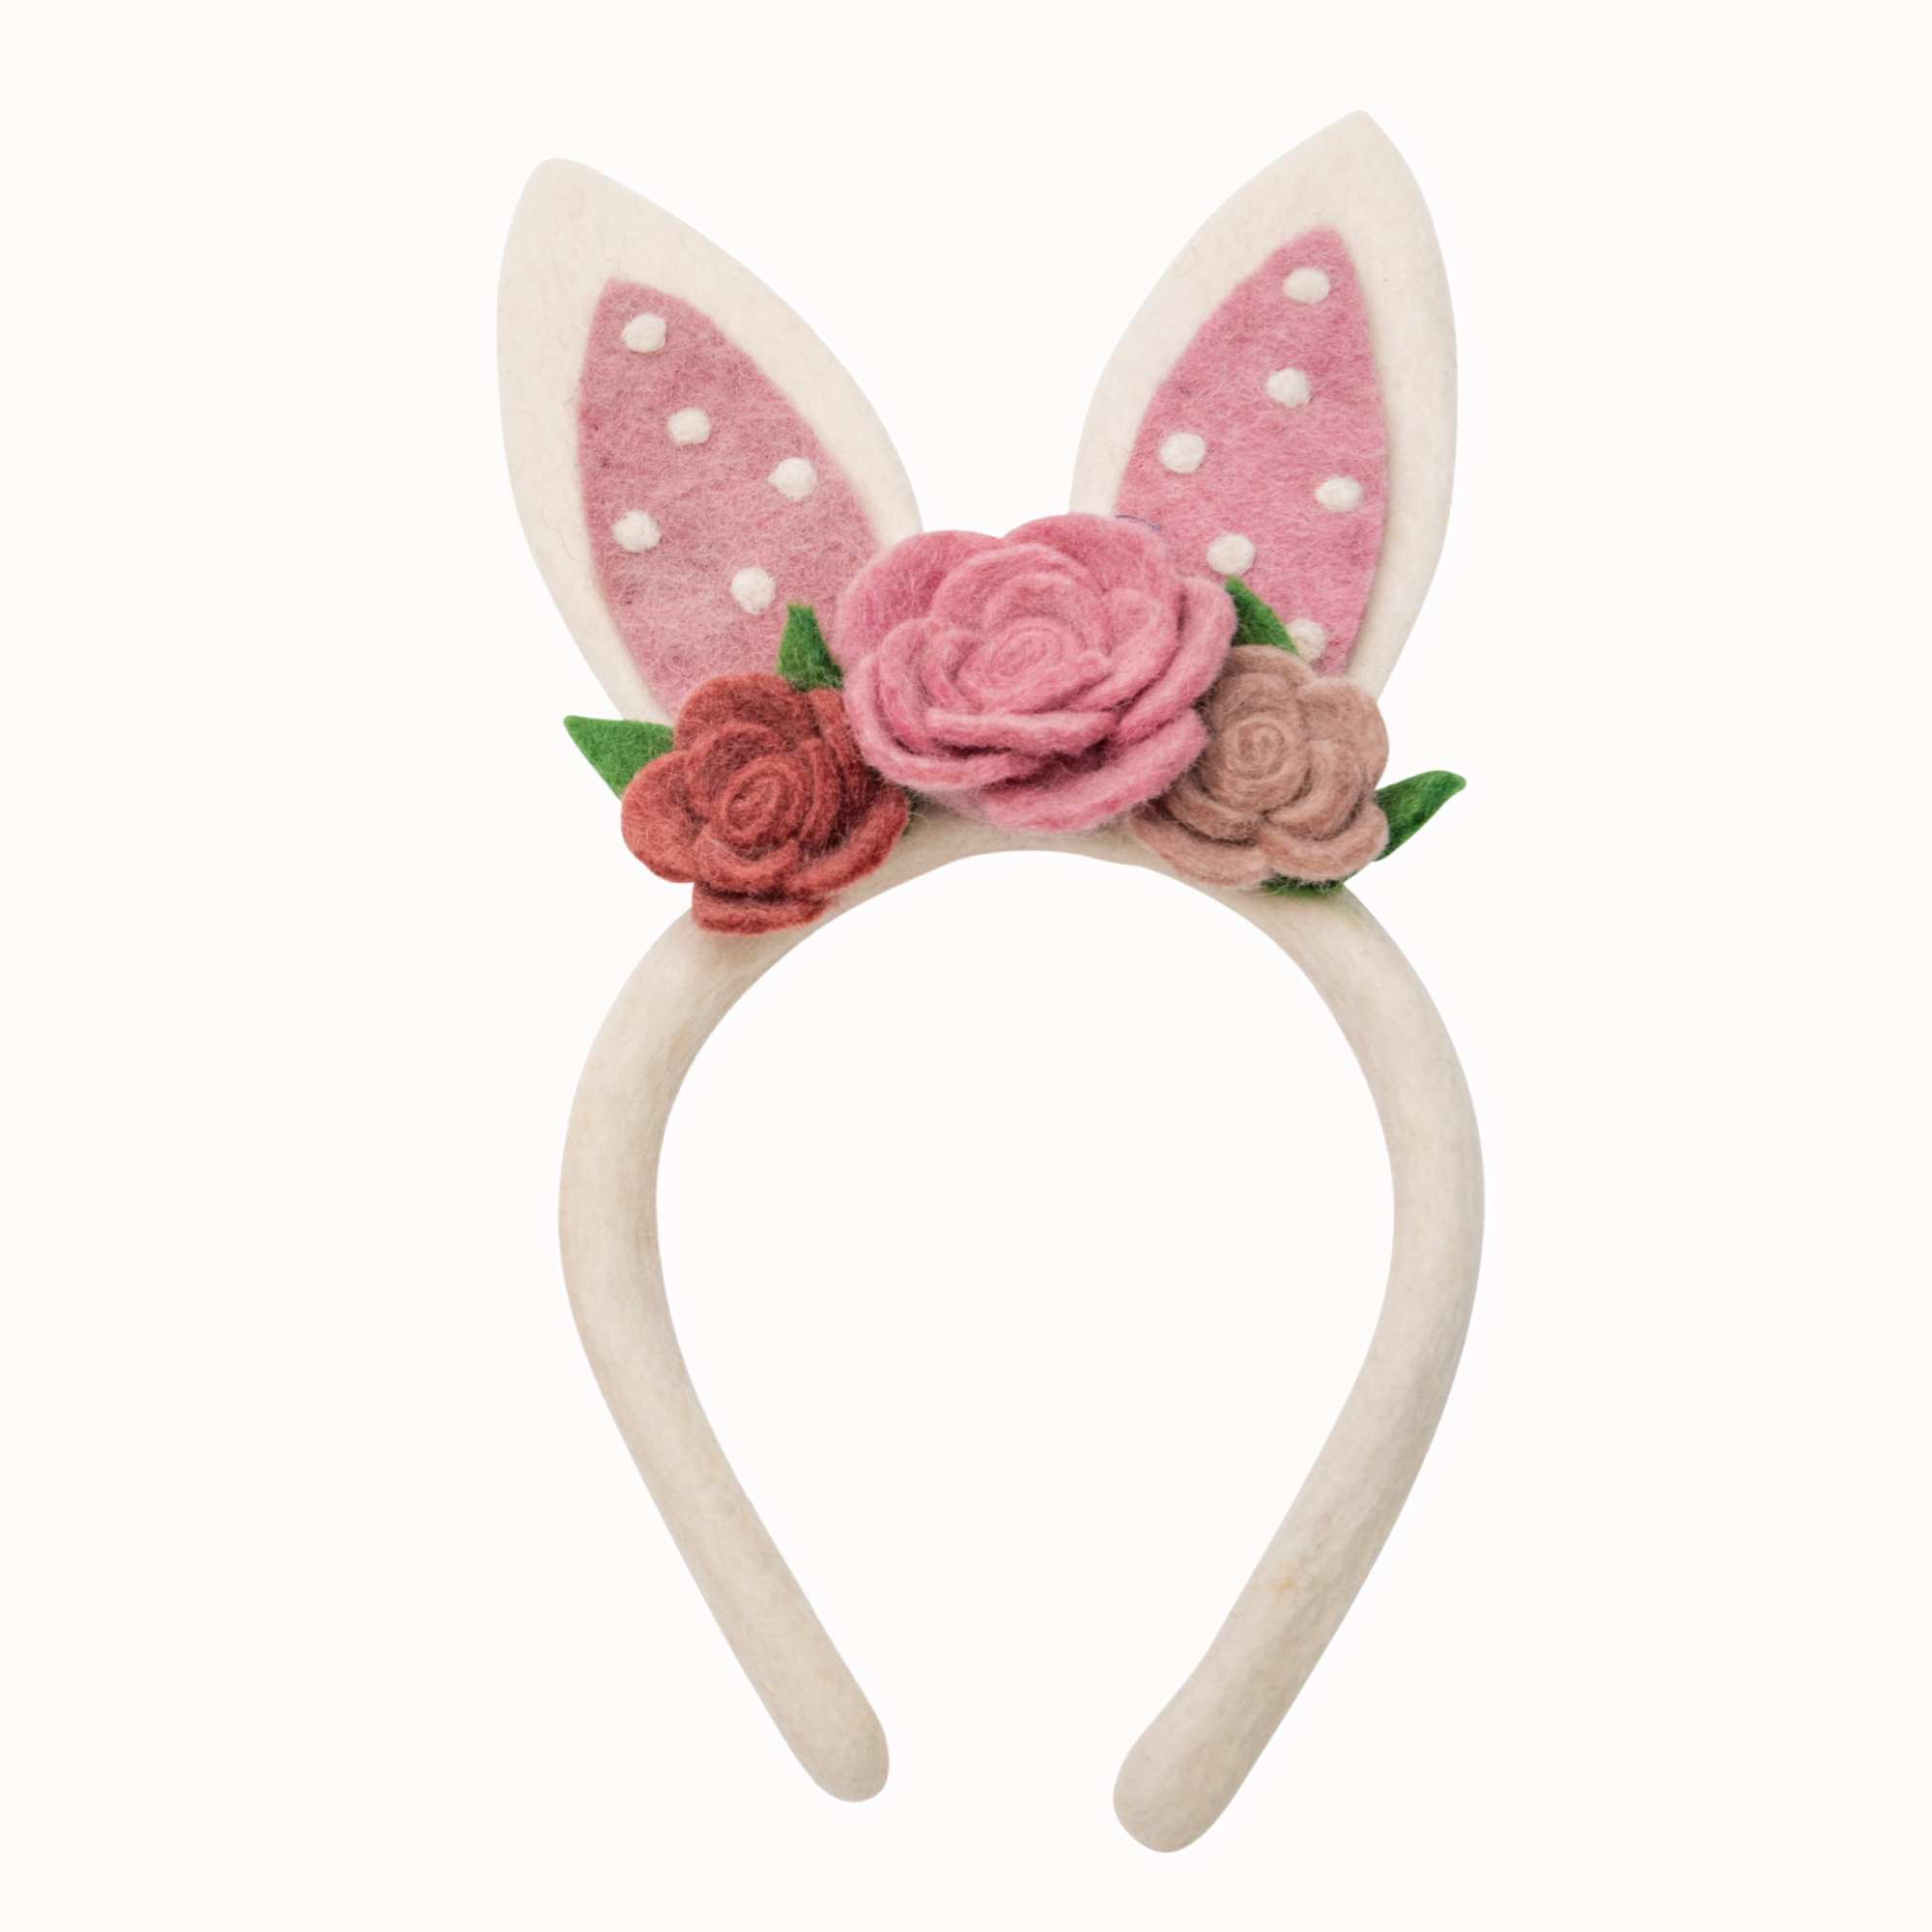 Pashom | Floral Bunny Ears Headband